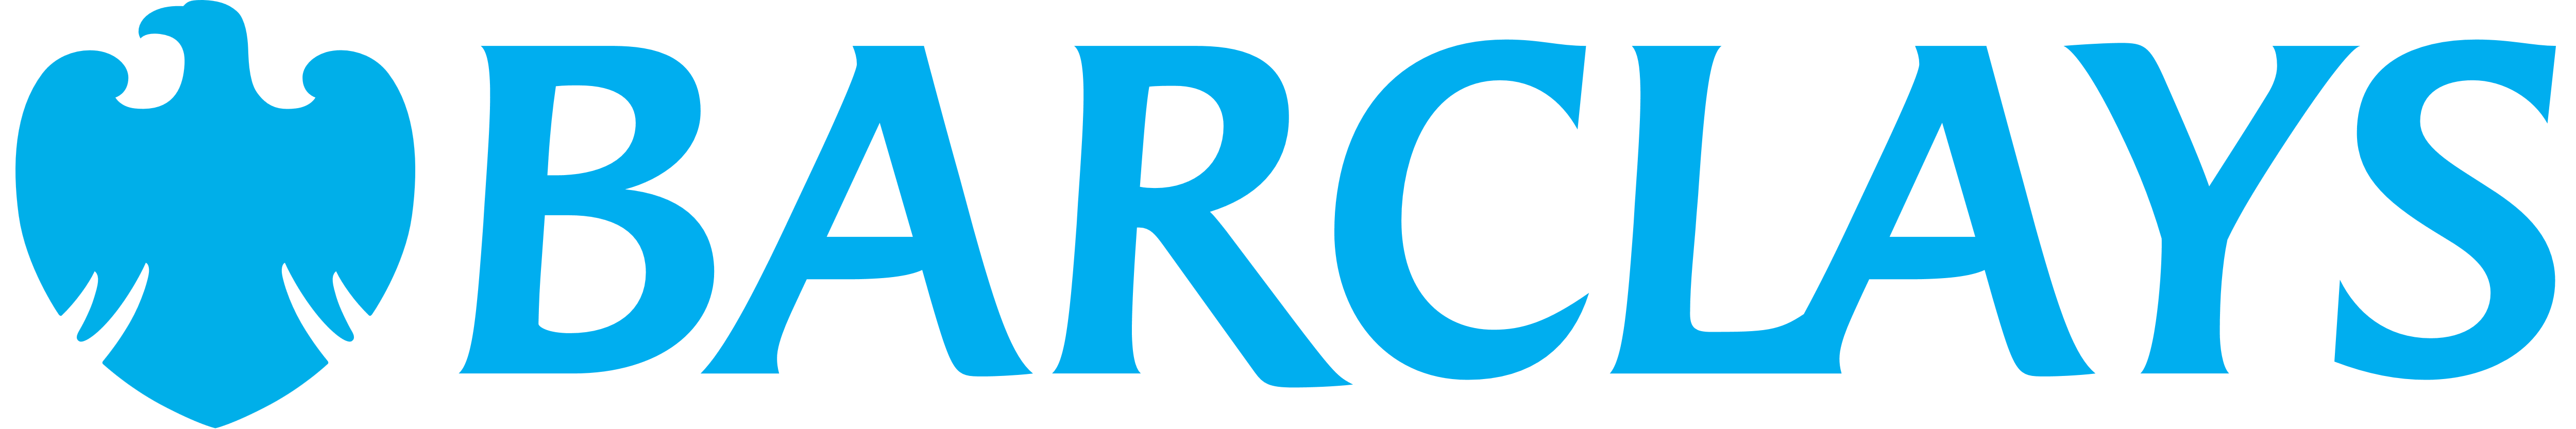 Barclays logo logotype